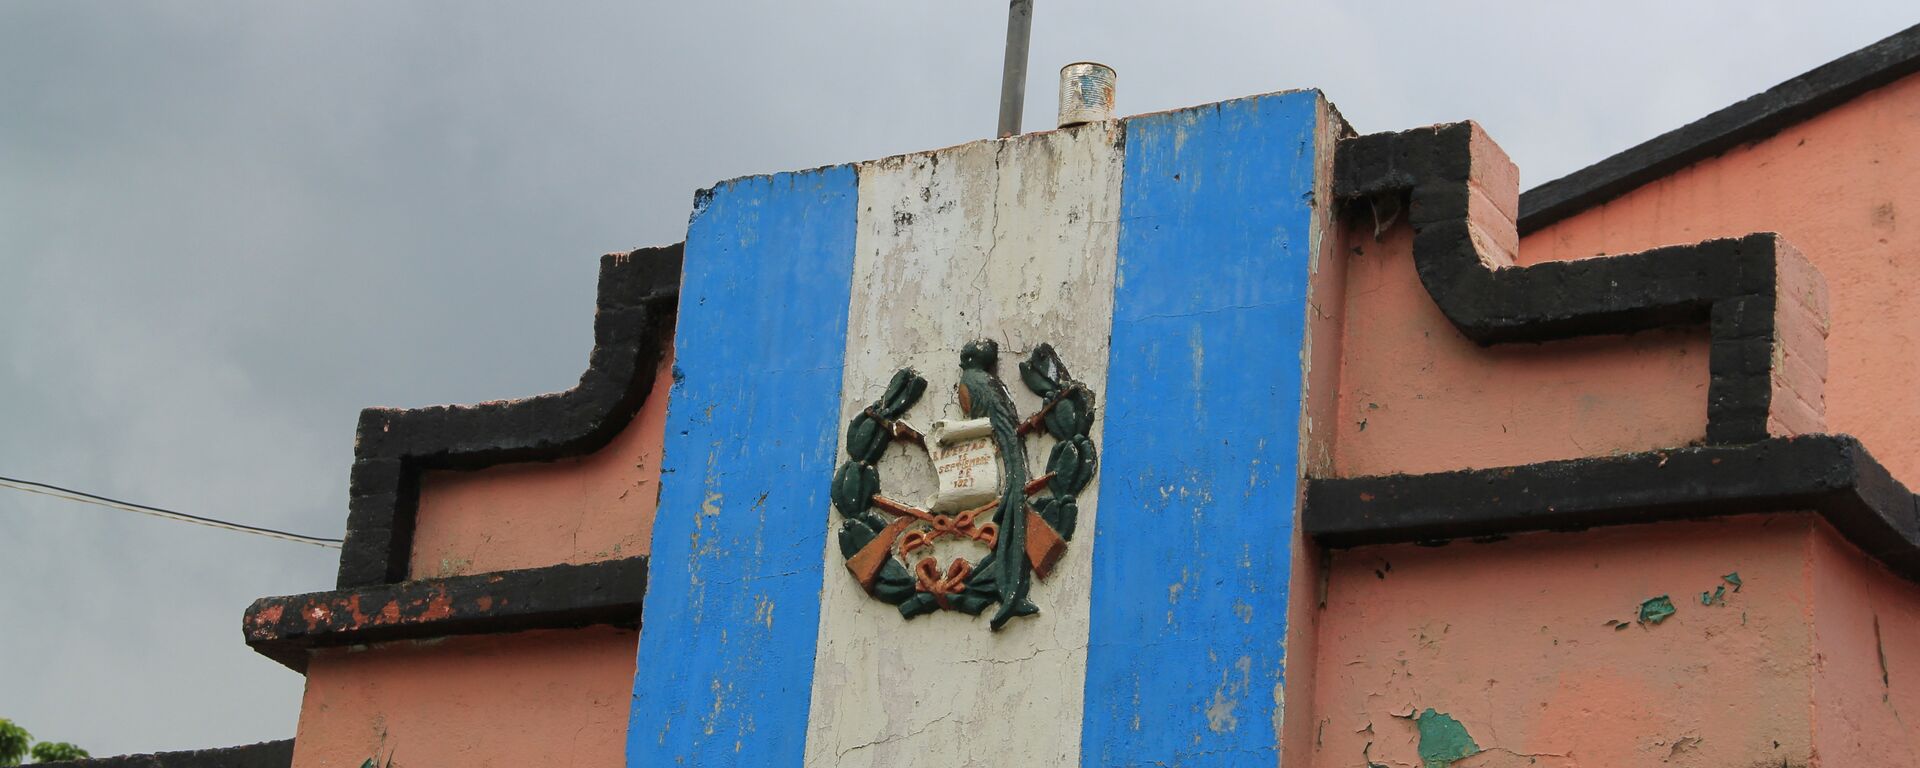 Bandera de Guatemala - Sputnik Mundo, 1920, 23.04.2021